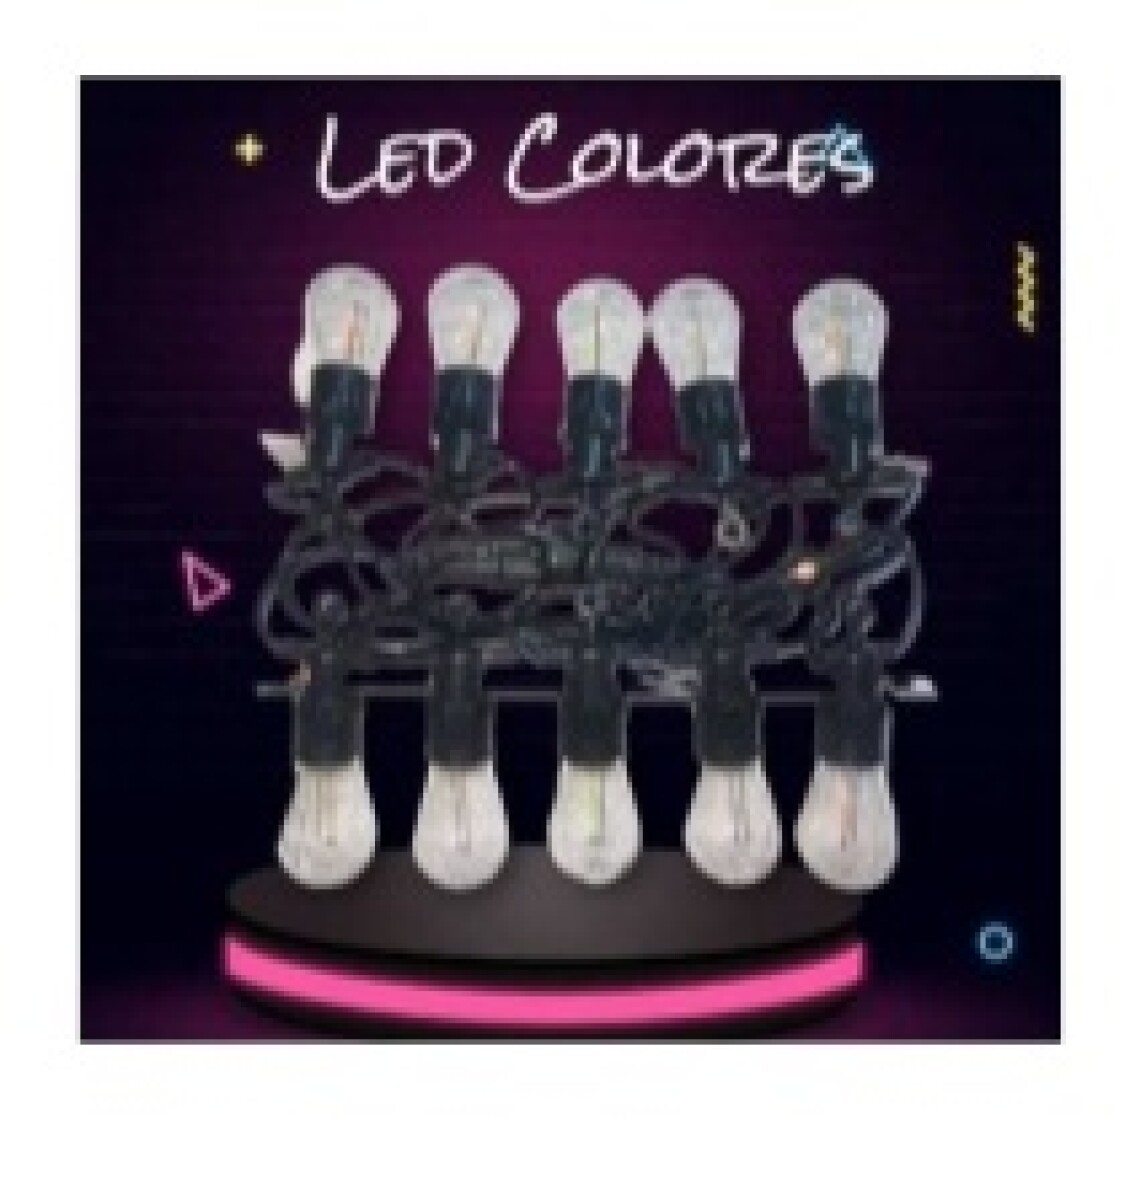 Guía de led exterior 10 lámparas de colores 5mts - 001 